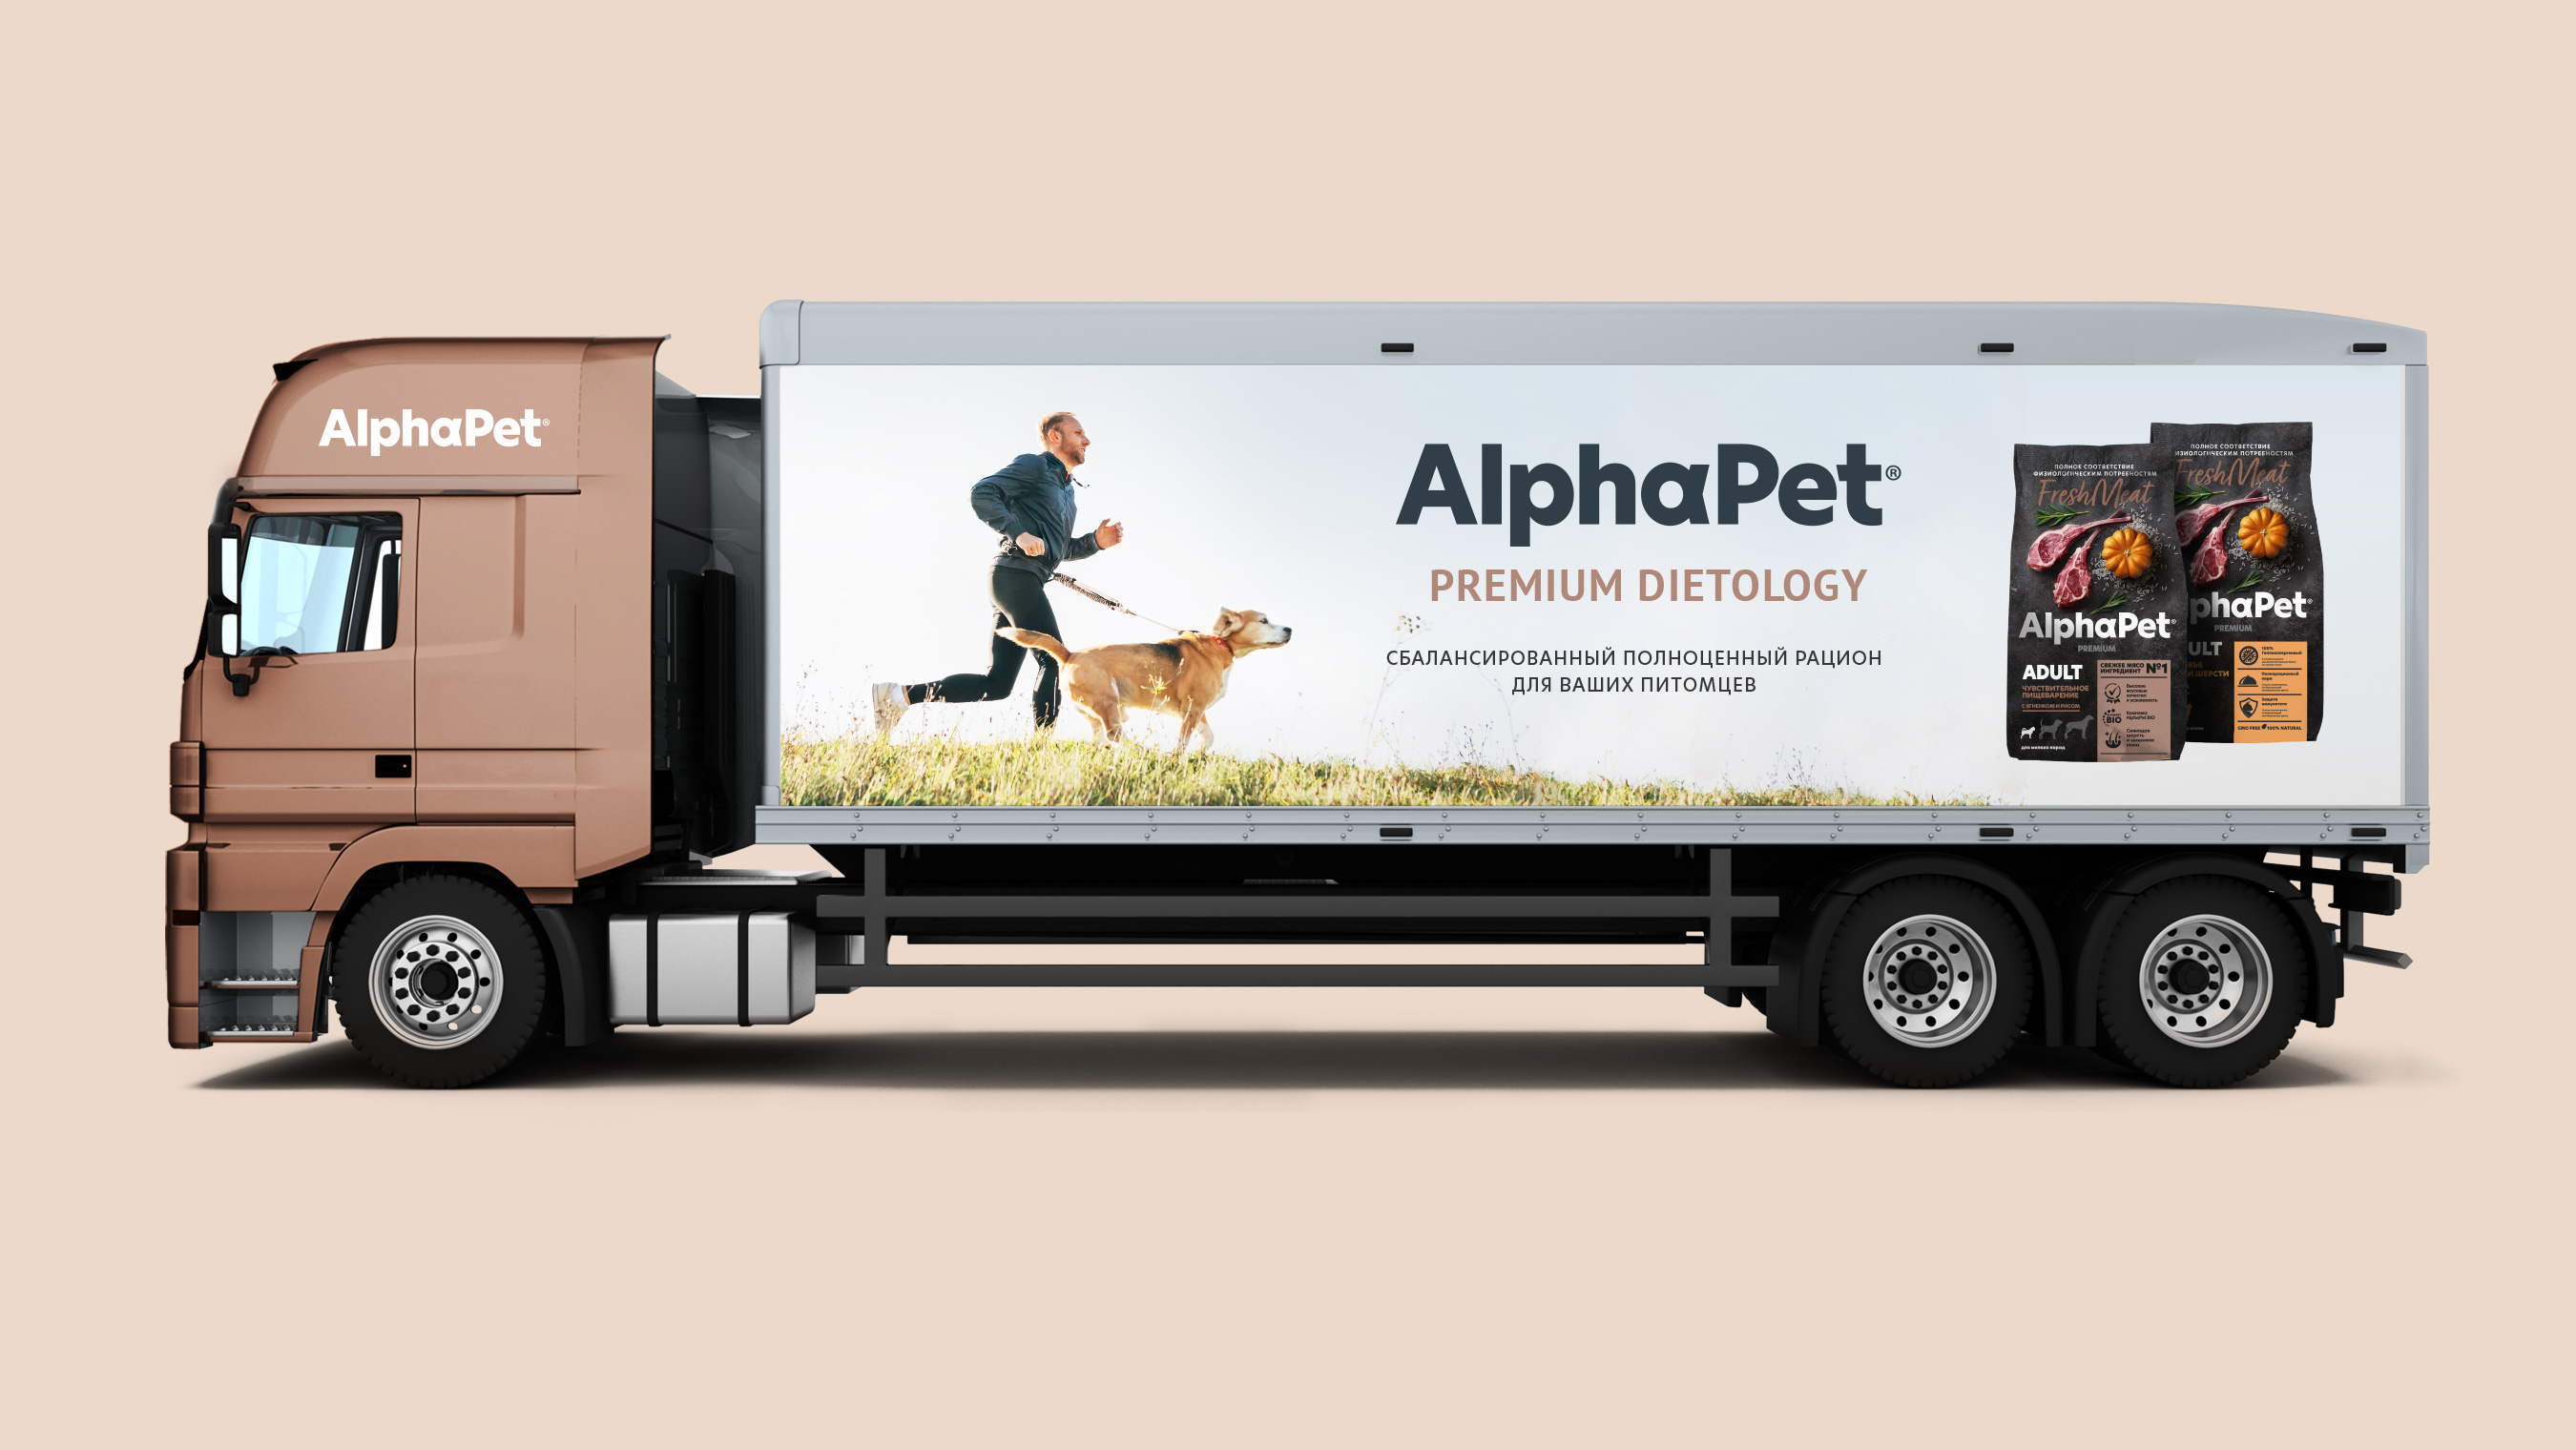 Дизайн рекламы бренда AlphaPet.